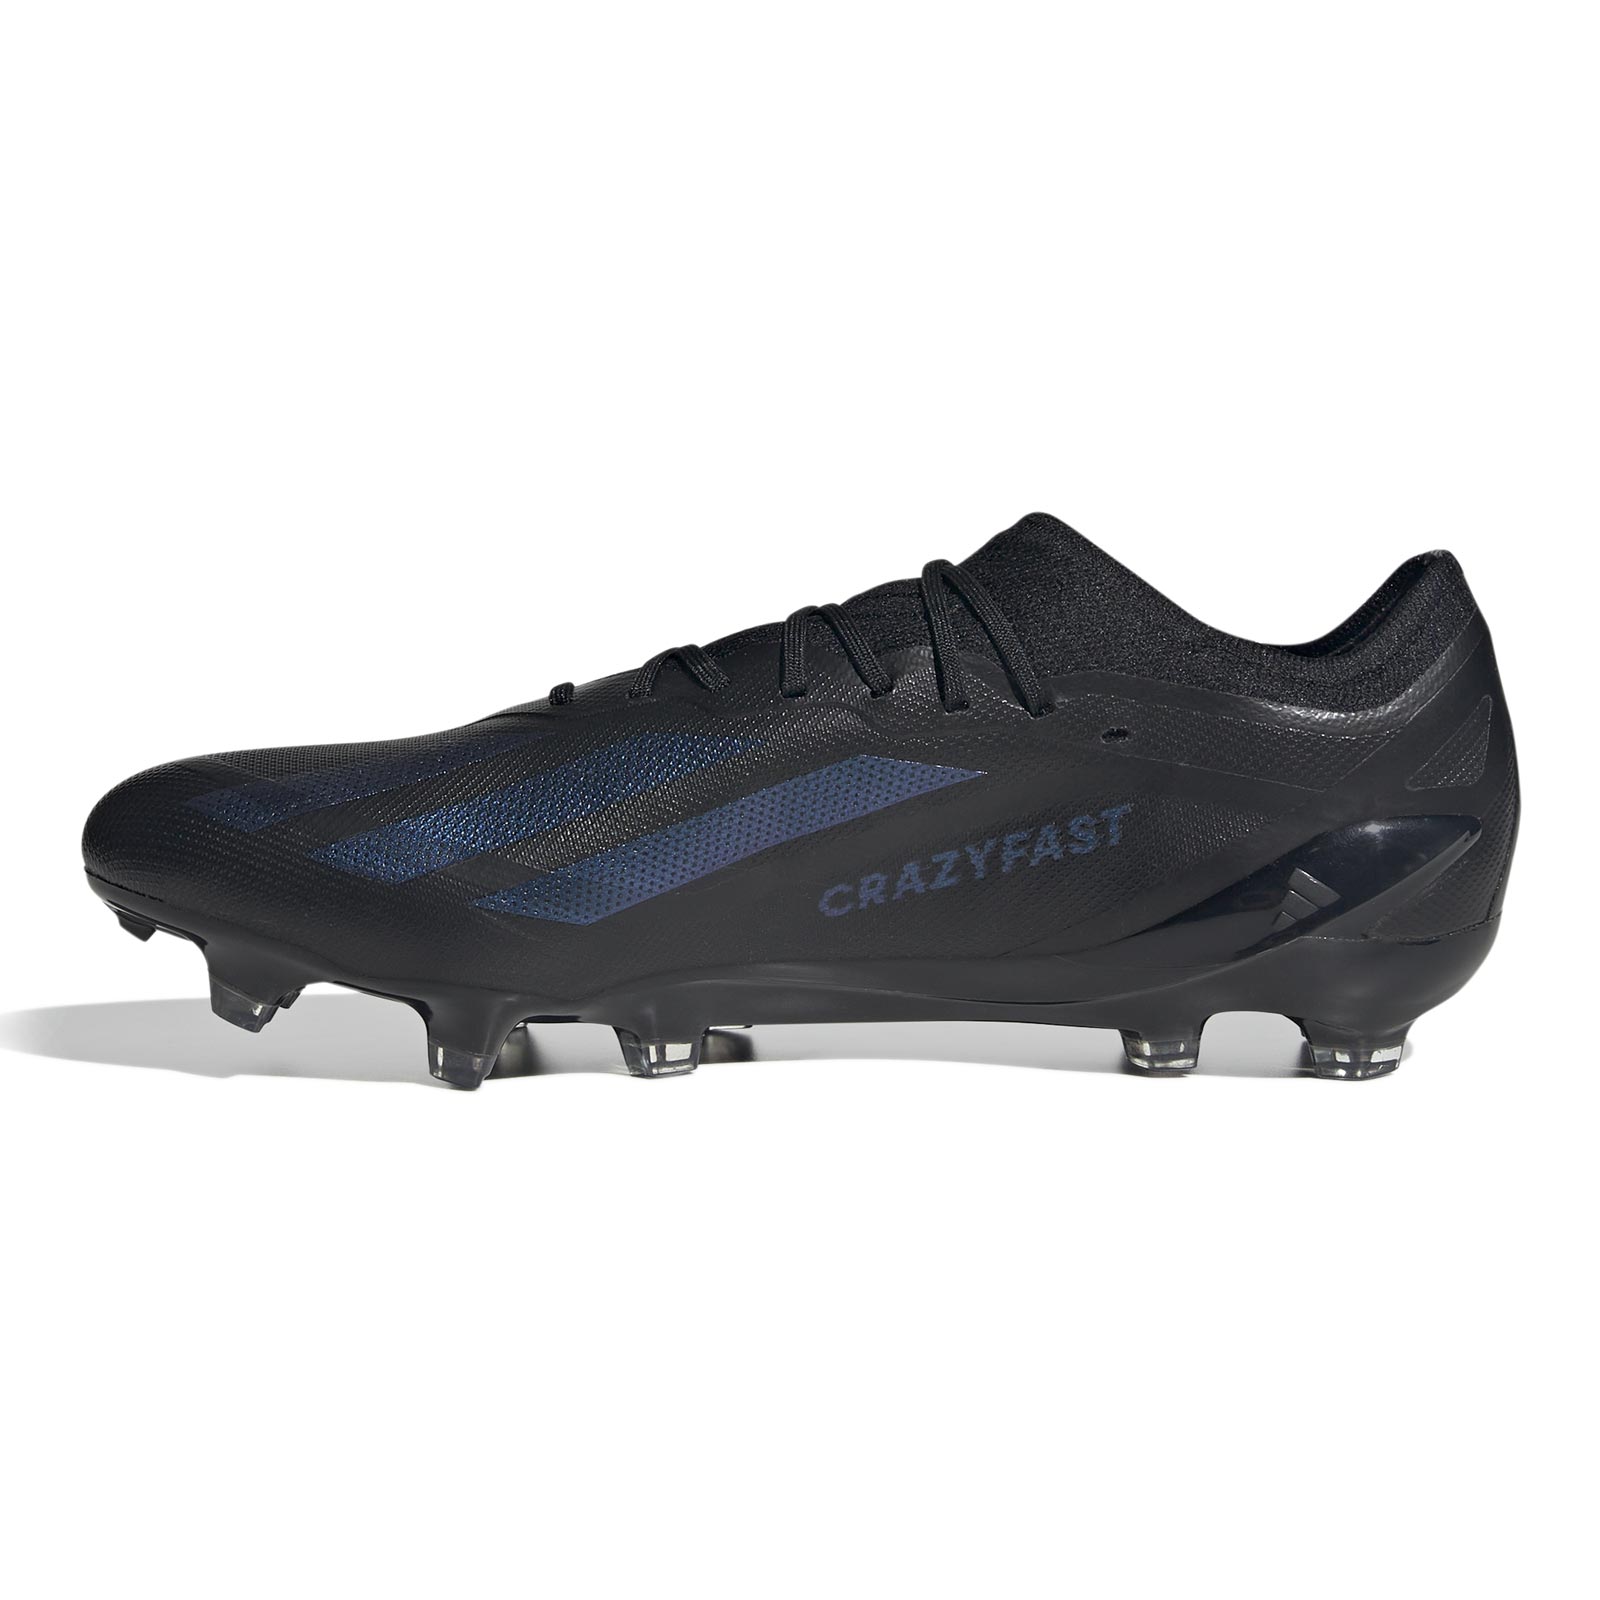 adidas X CrazyFast.1 Firm Ground Football Boots | Adidas Boots ...